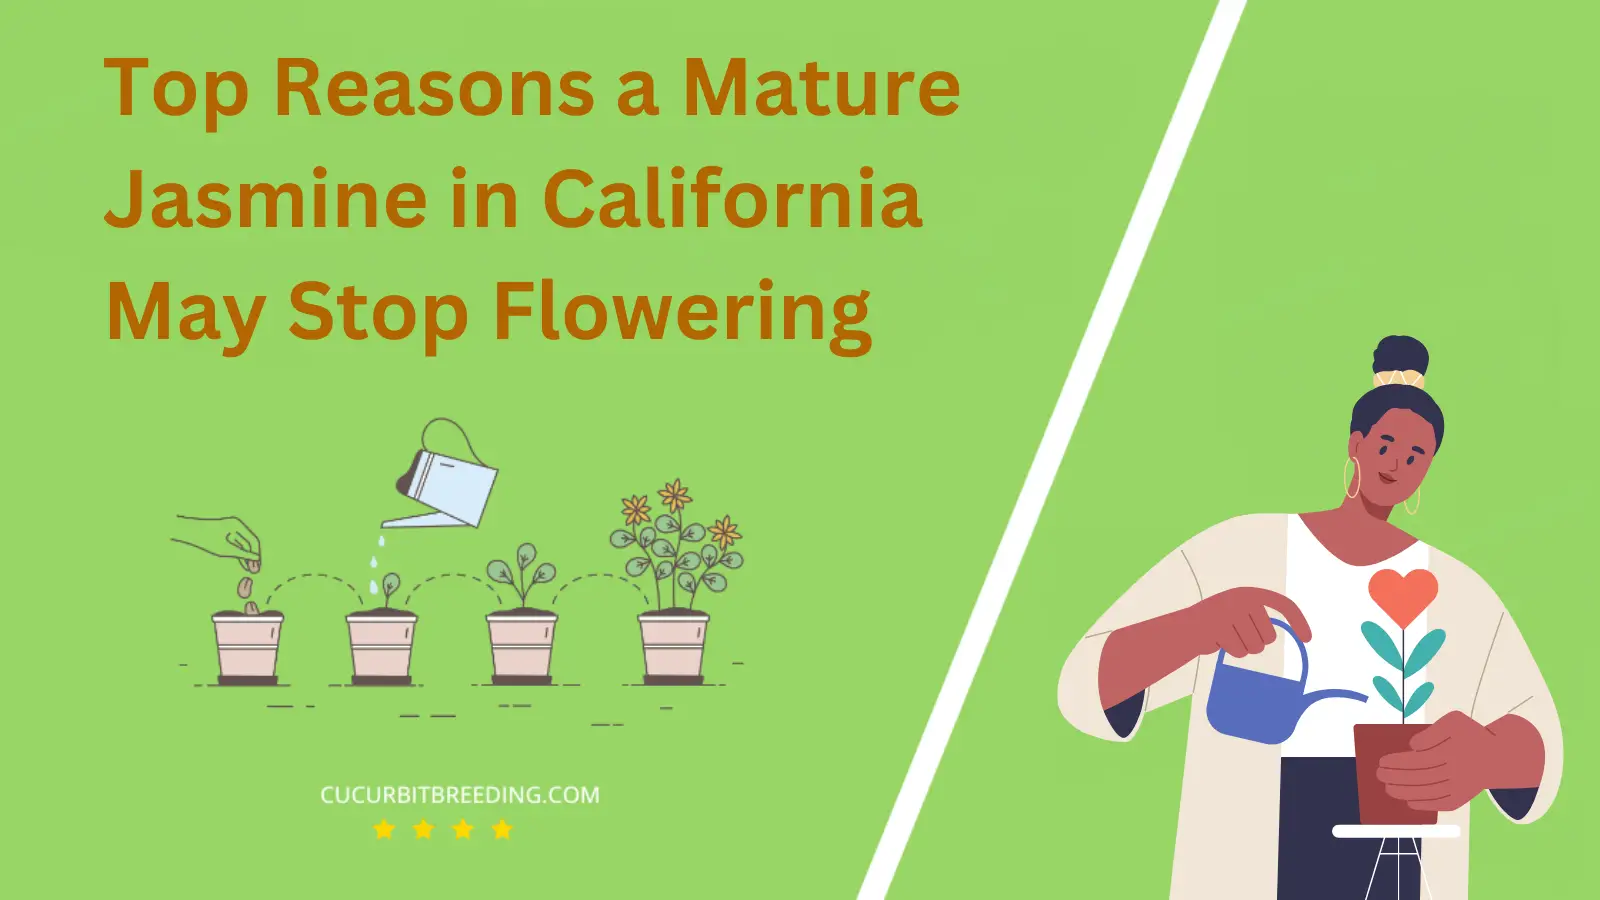 Top Reasons a Mature Jasmine in California May Stop Flowering